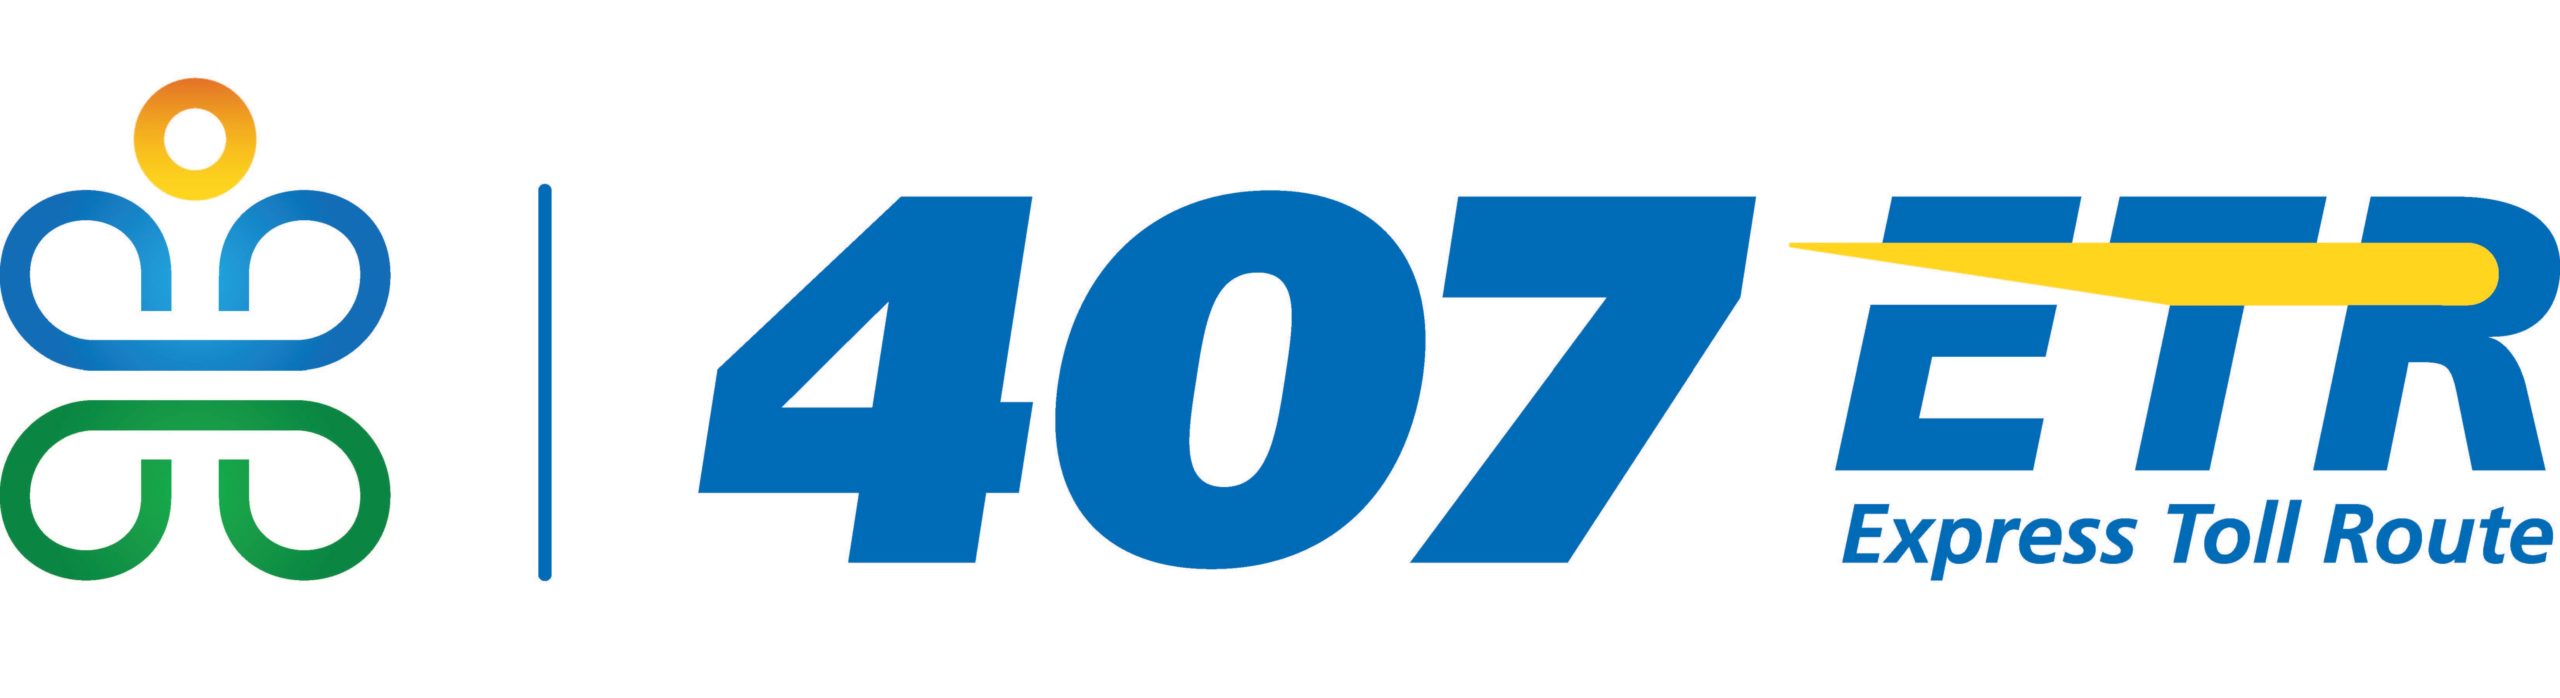 407 logo